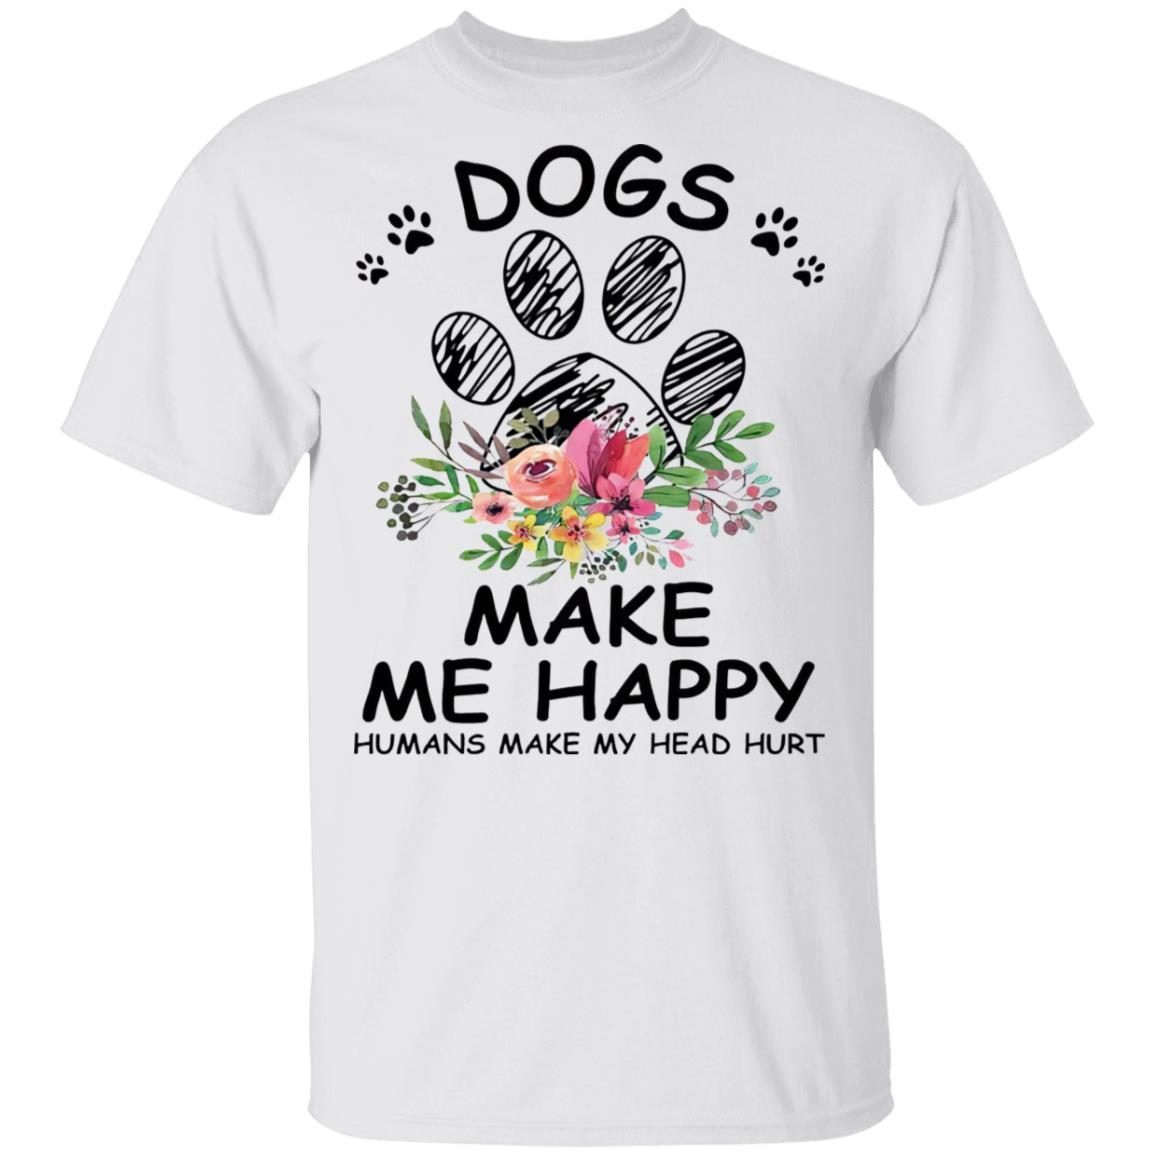 Dogs make me happy humans make my head hurt shirts